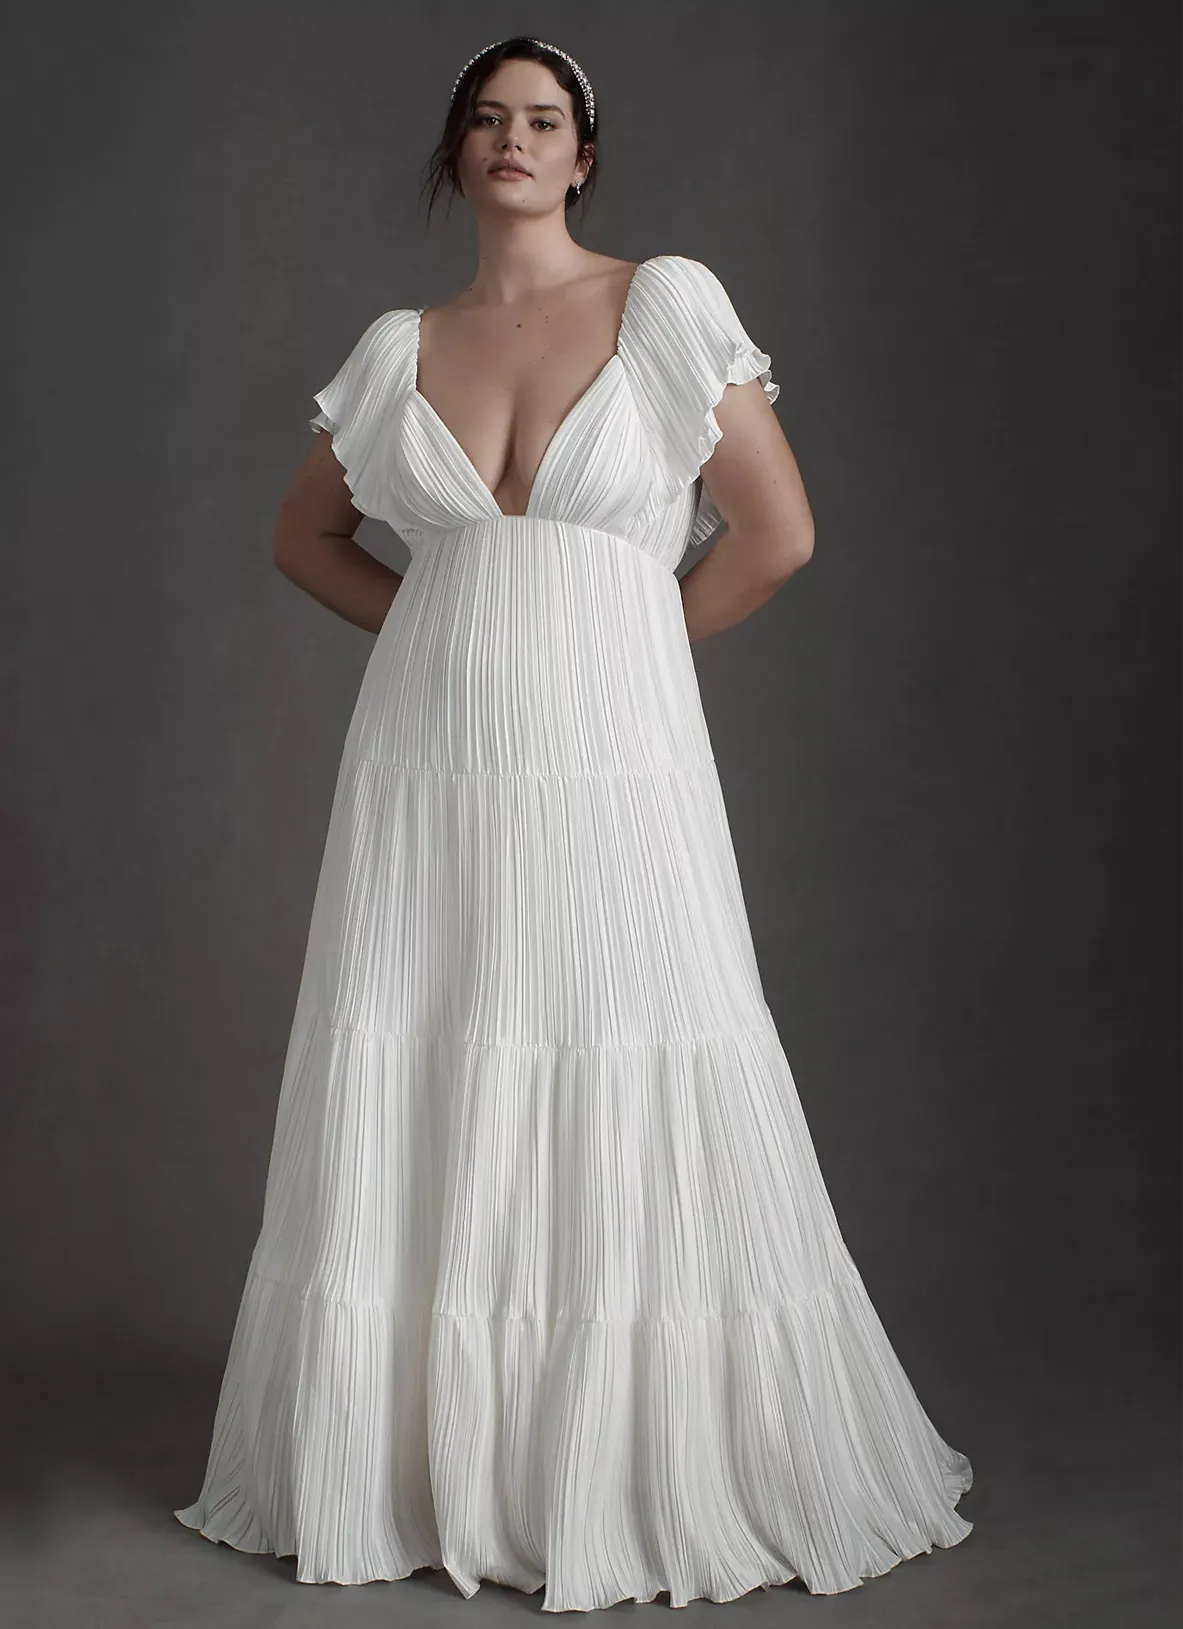 Plus-Sized Bridal Dresses